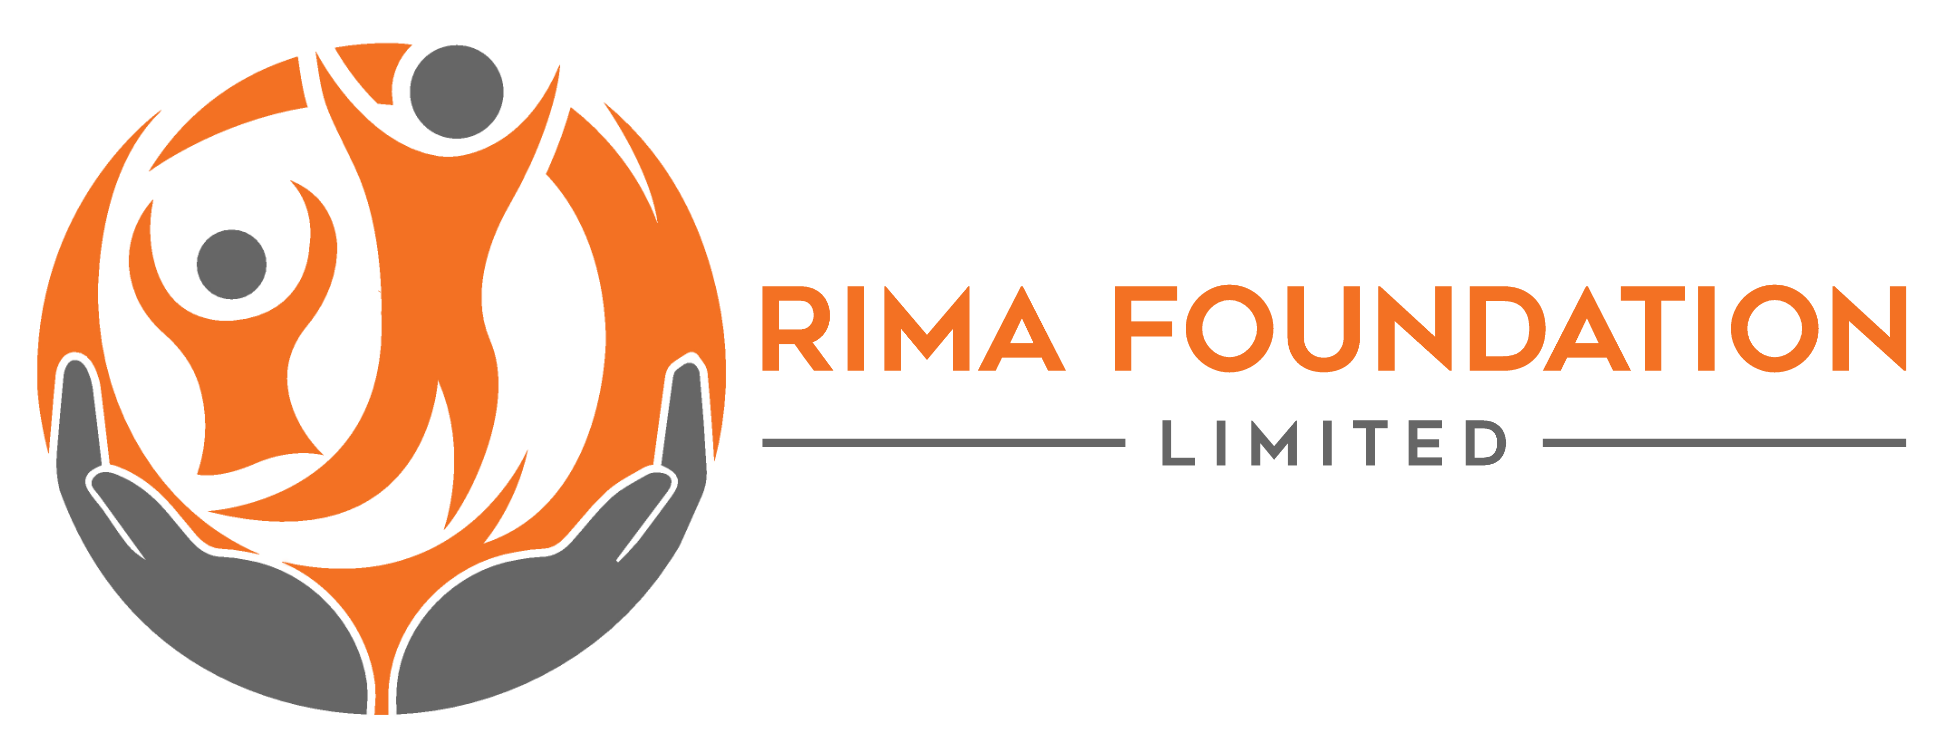 Rima Foundation